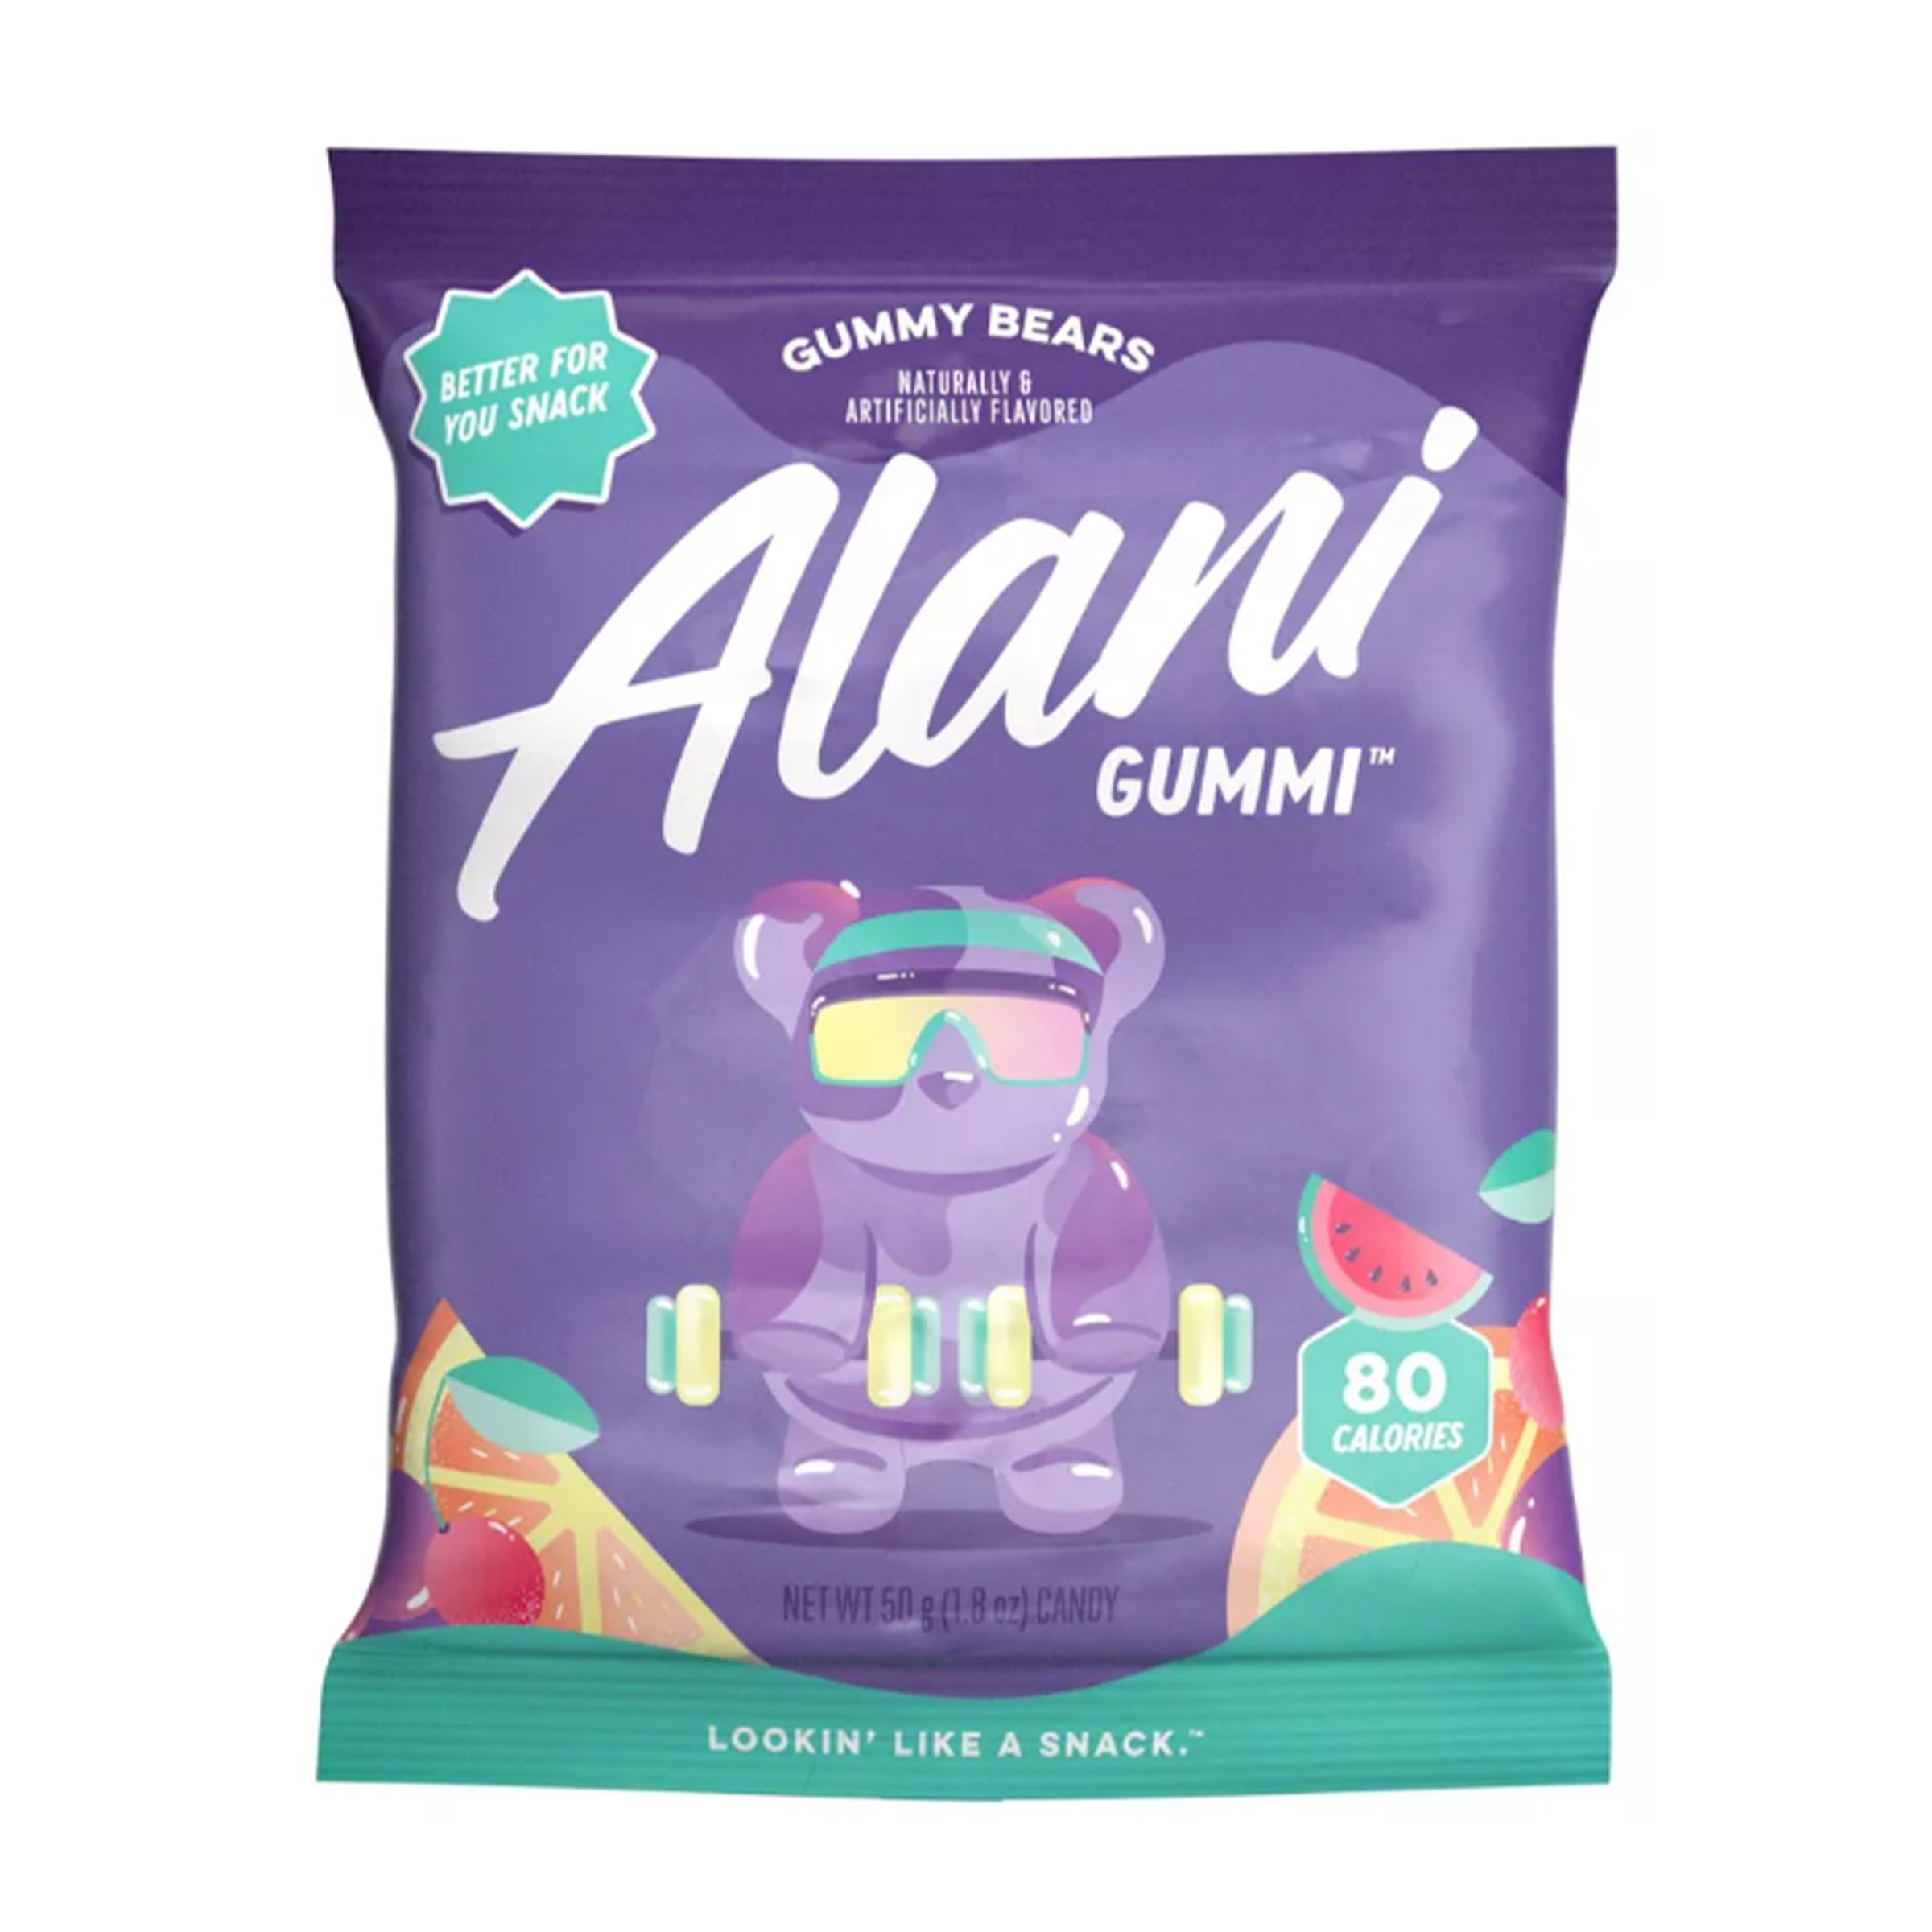 Alani Gummi - Gummy Bears